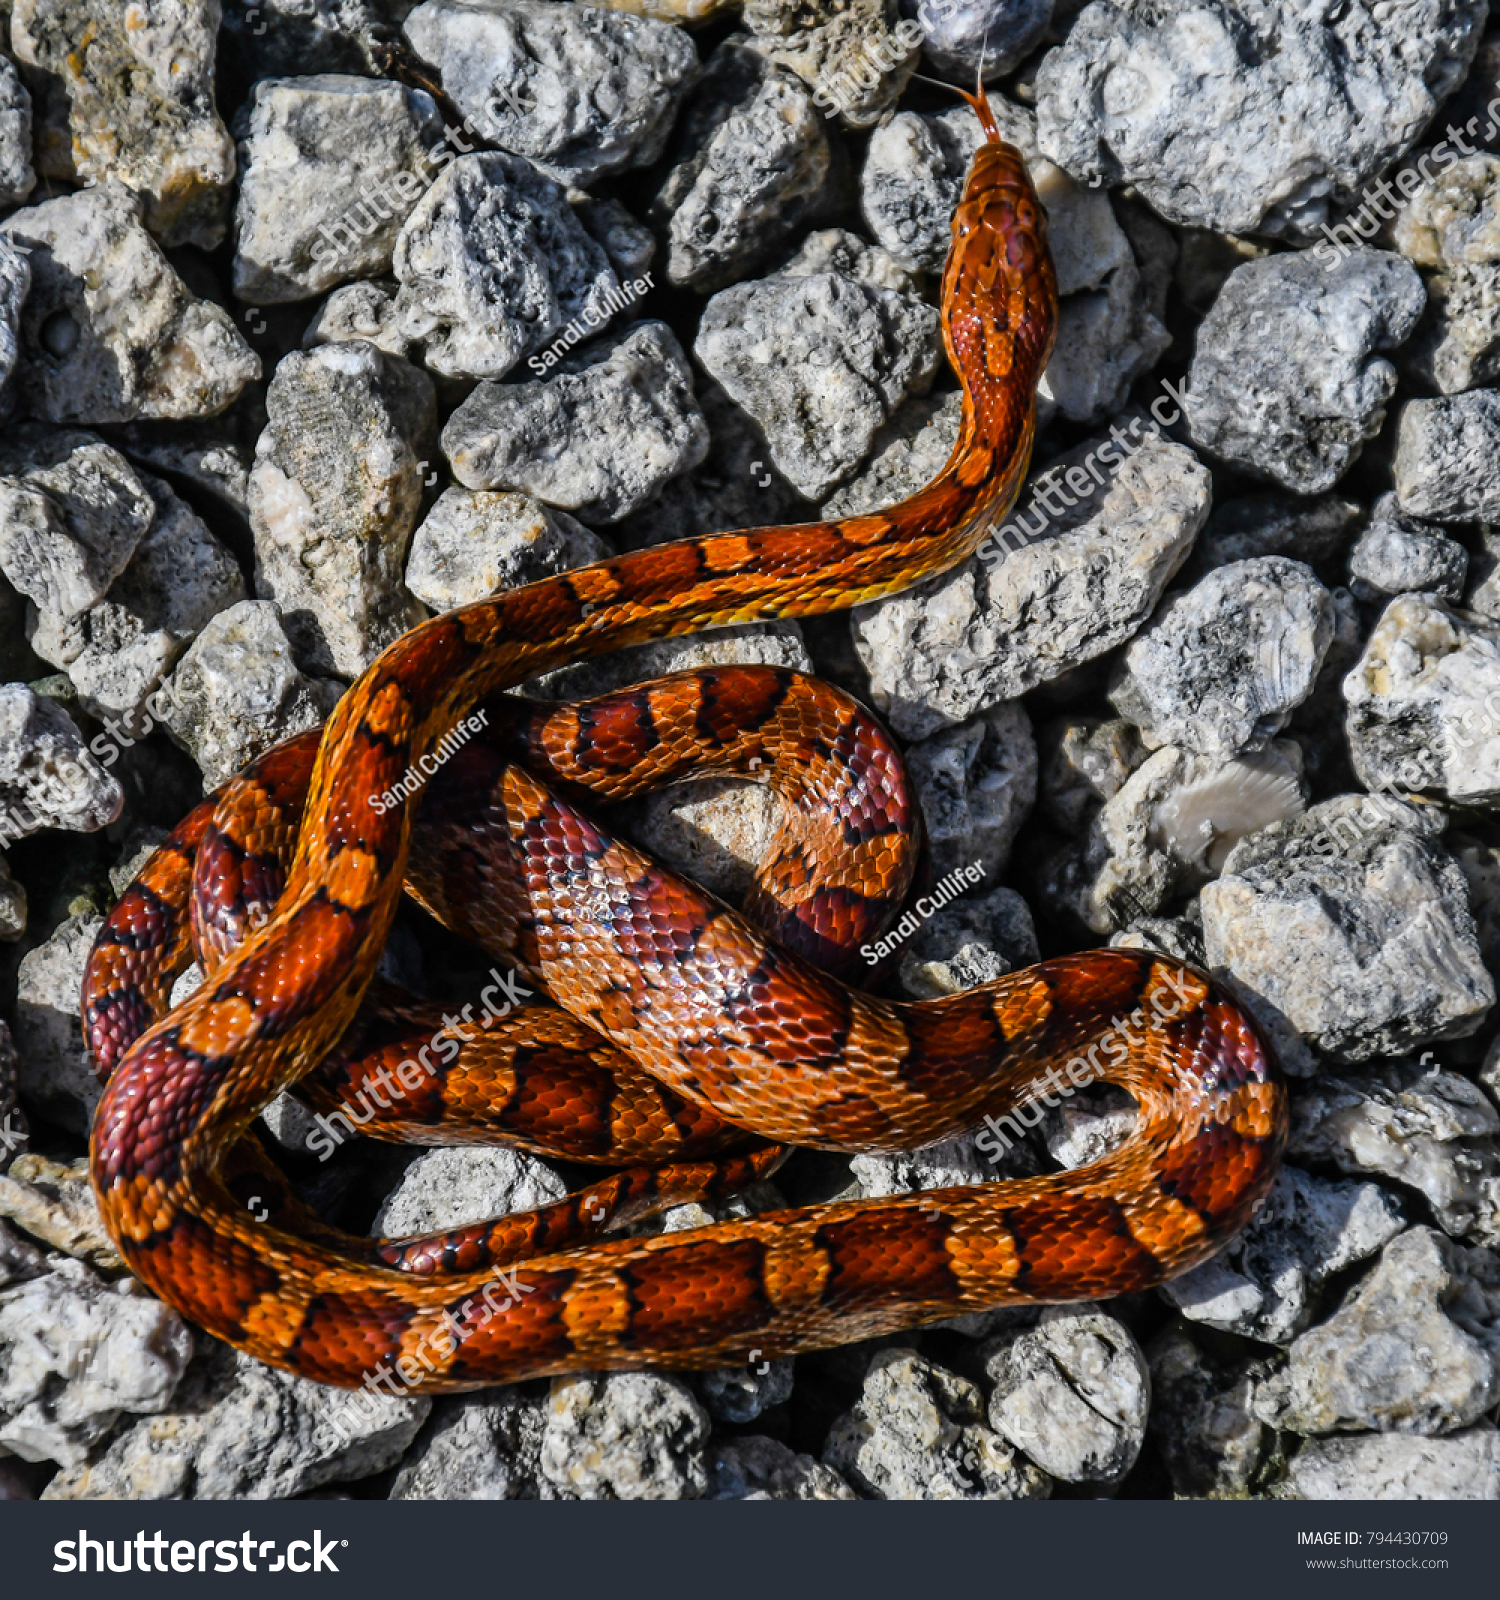 Florida Corn Snake Images Stock Photos Vectors Shutterstock